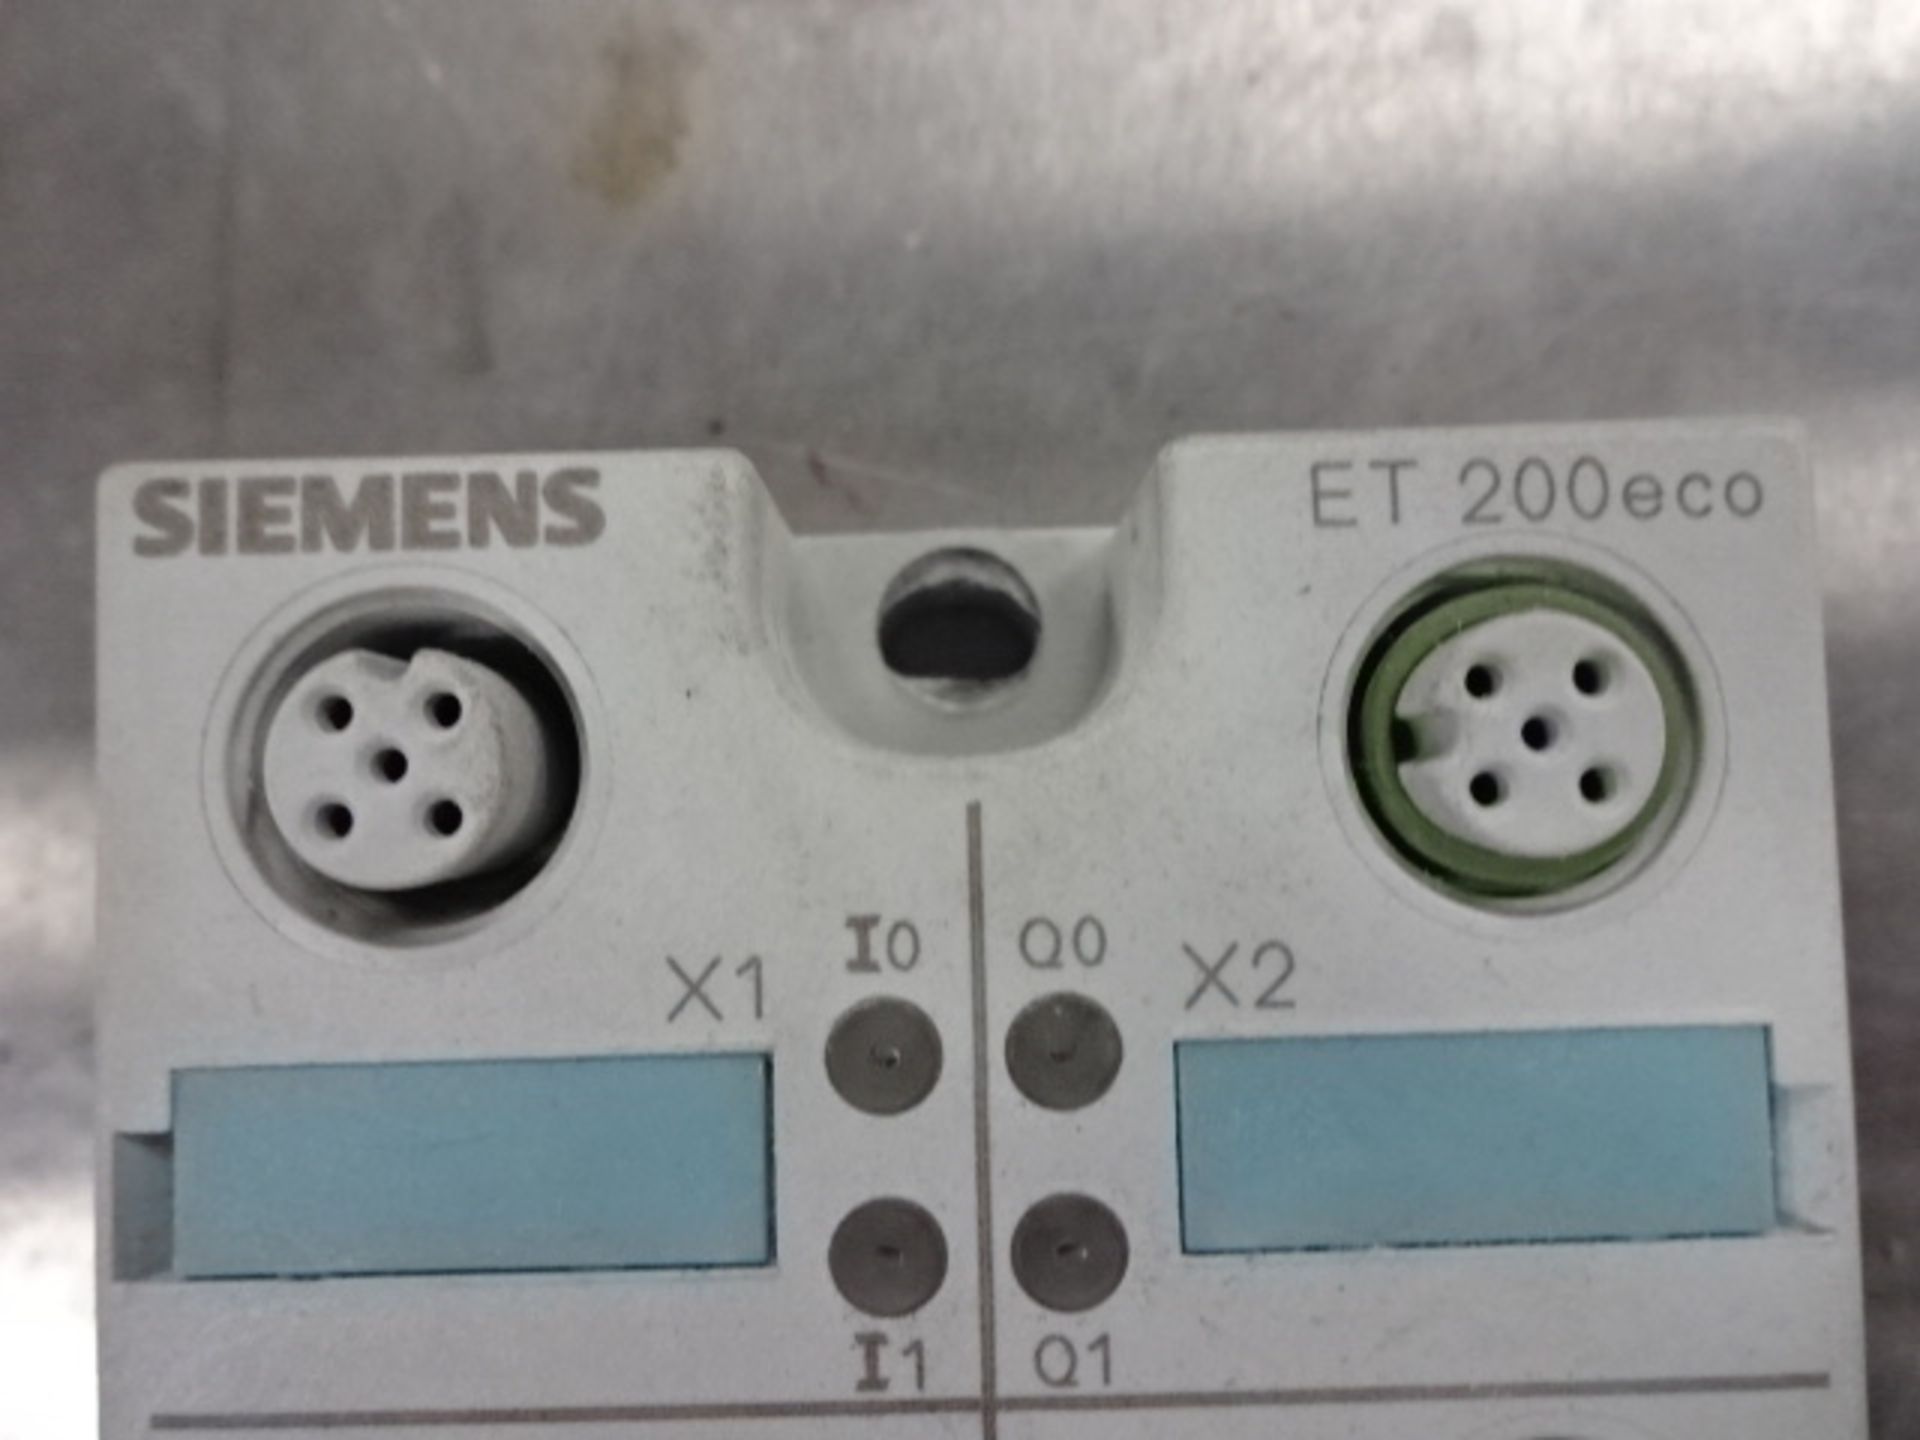 Siemens ET 200eco - Image 2 of 4